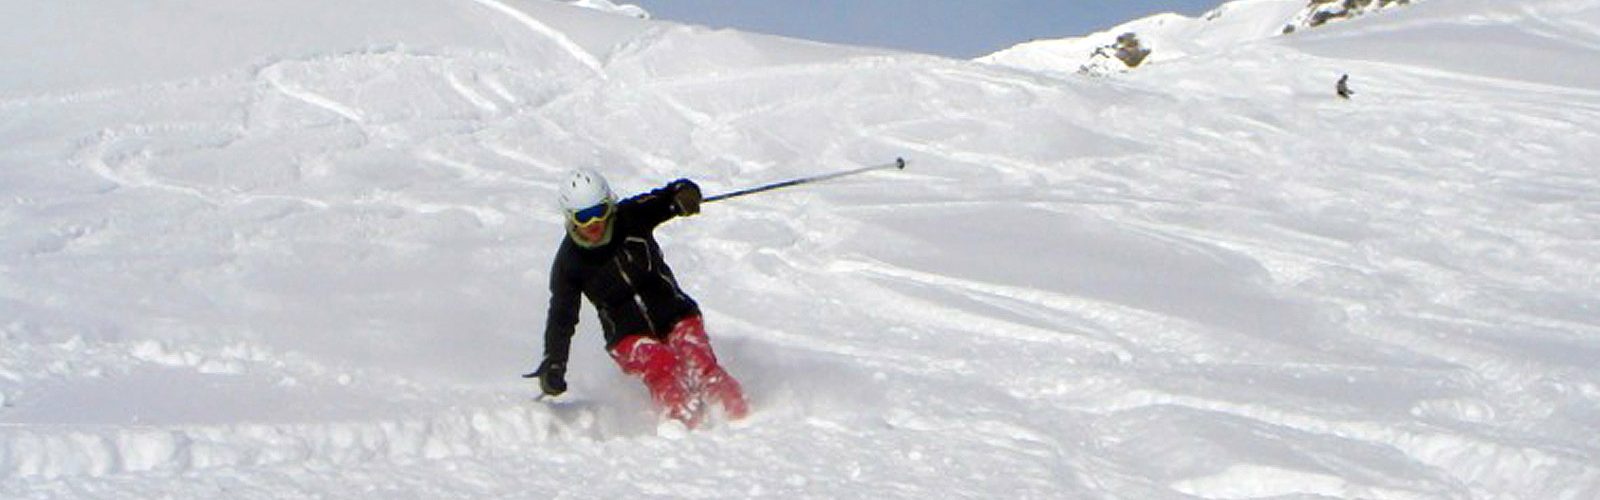 Morzine Avoriaz professional skiing slopes